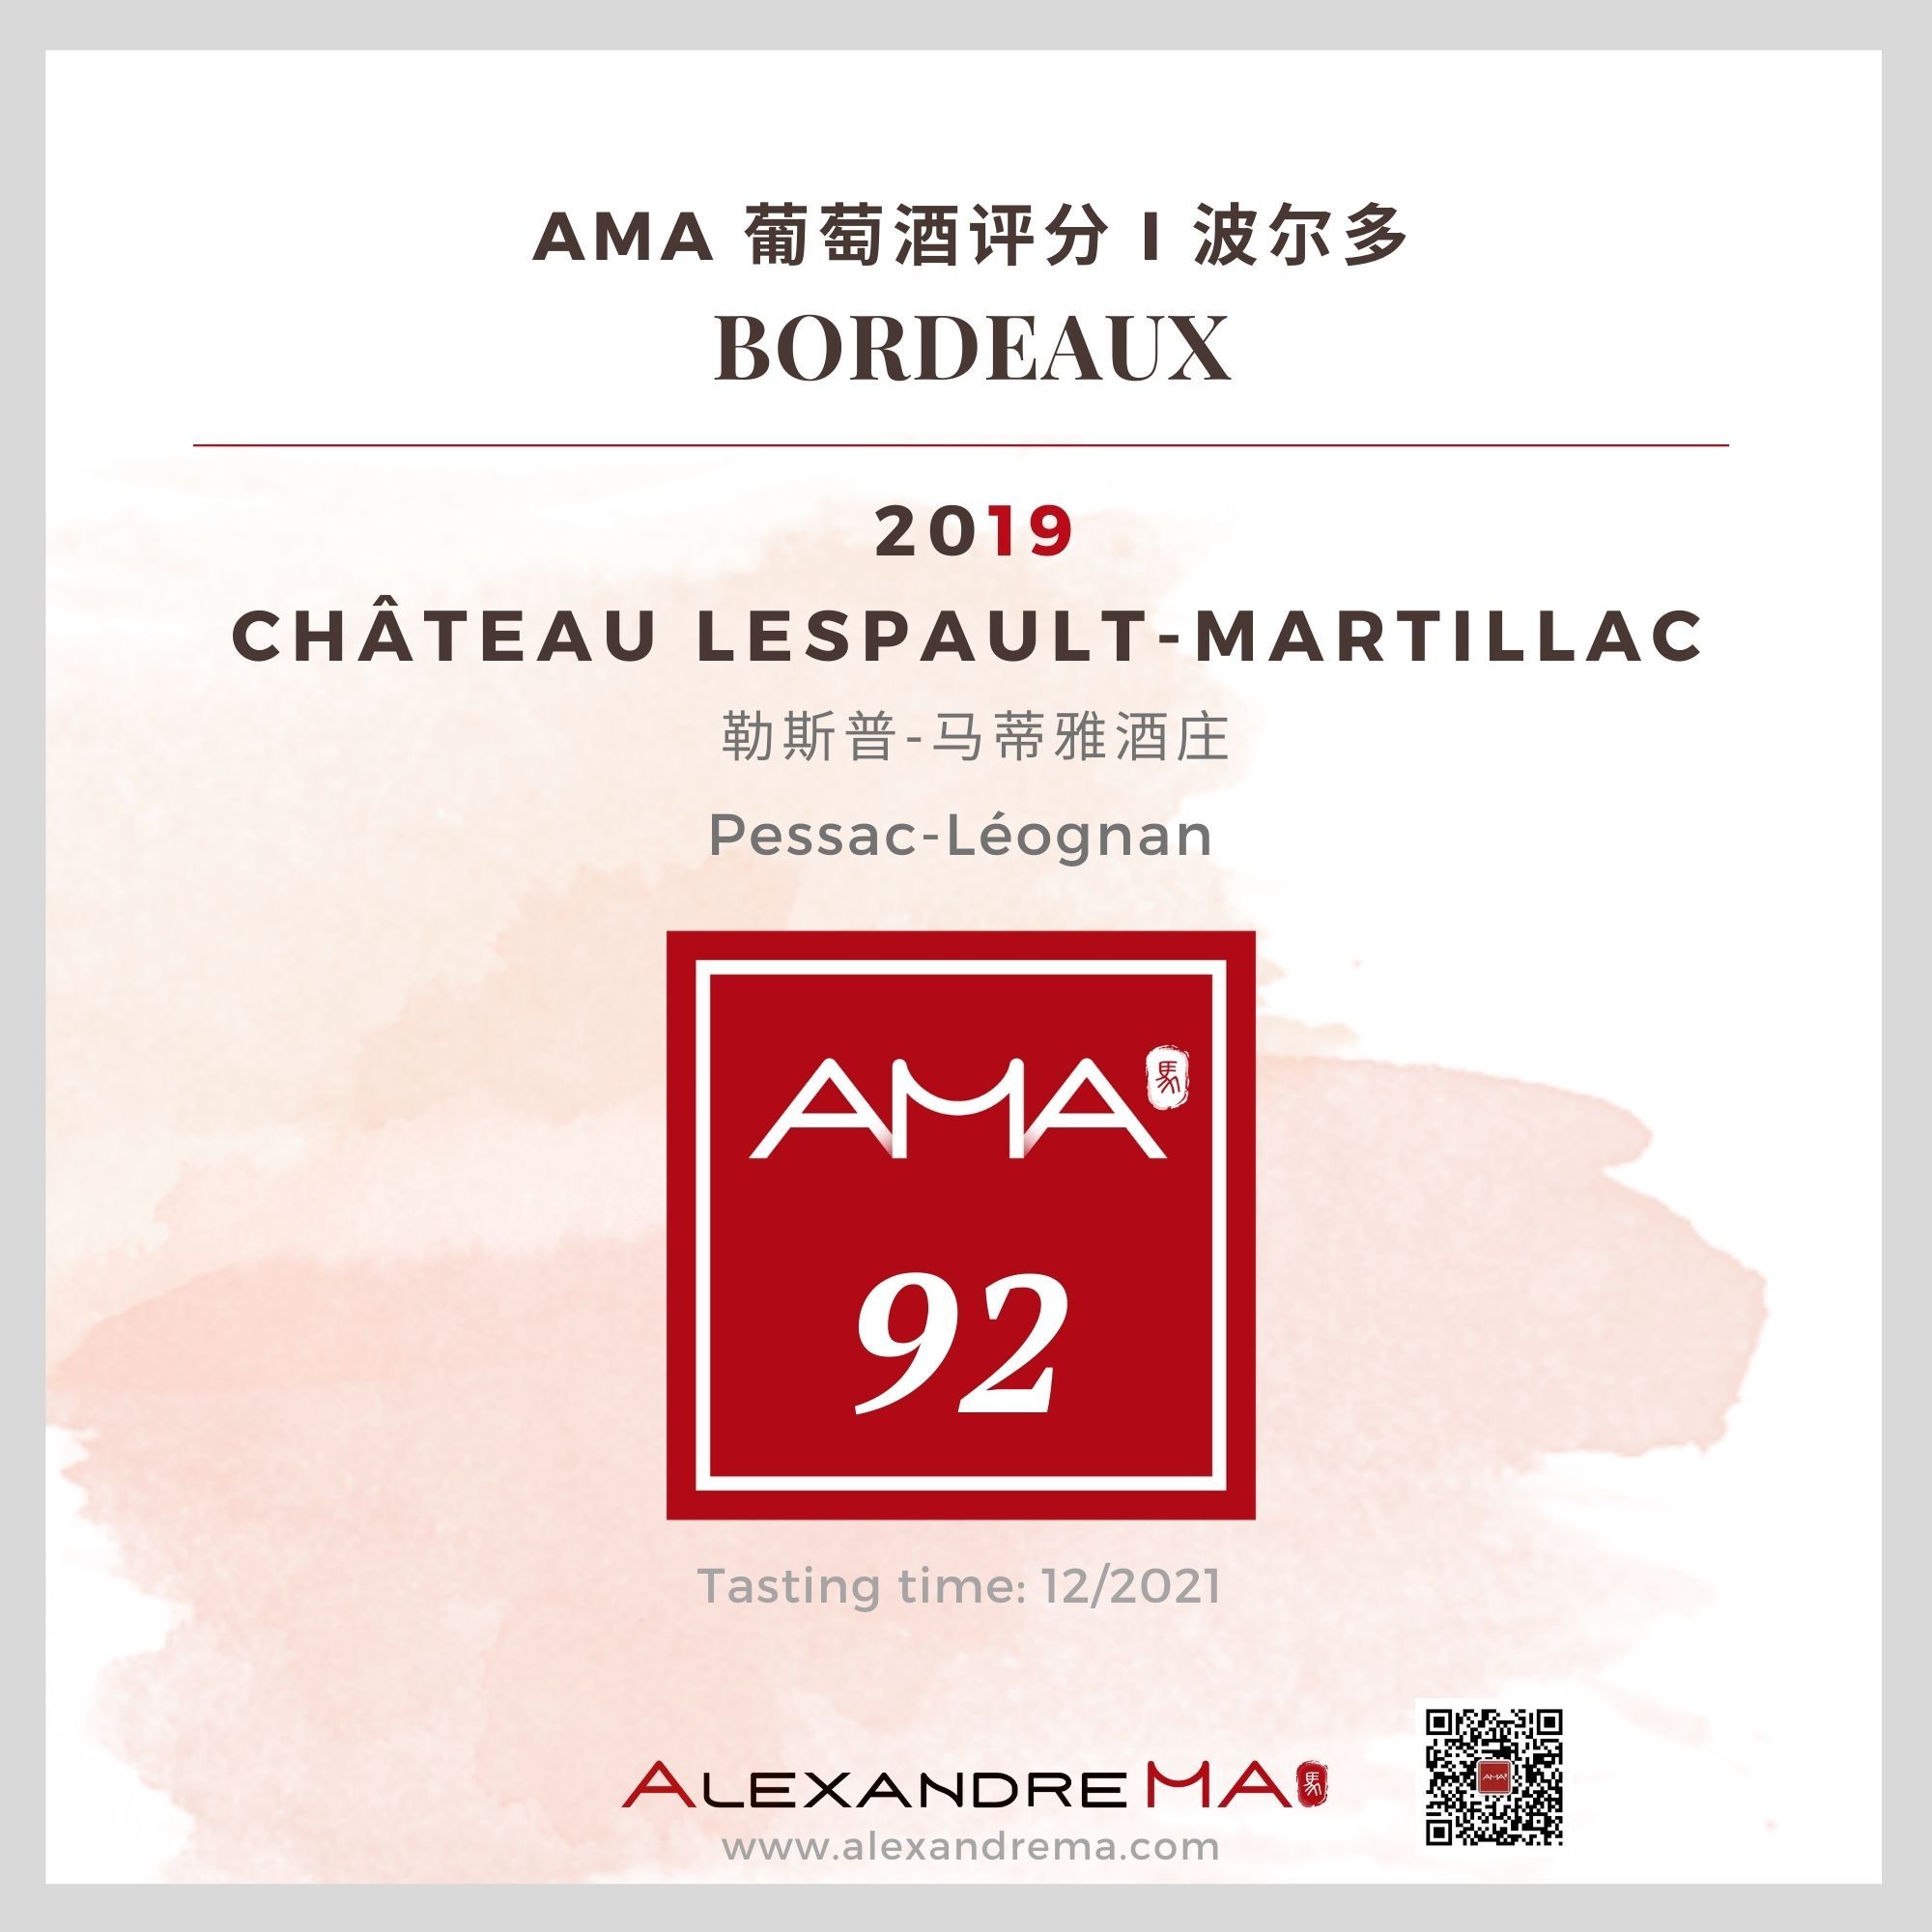 Château Lespault-Martillac 2019 勒斯普-马蒂雅酒庄 - Alexandre Ma